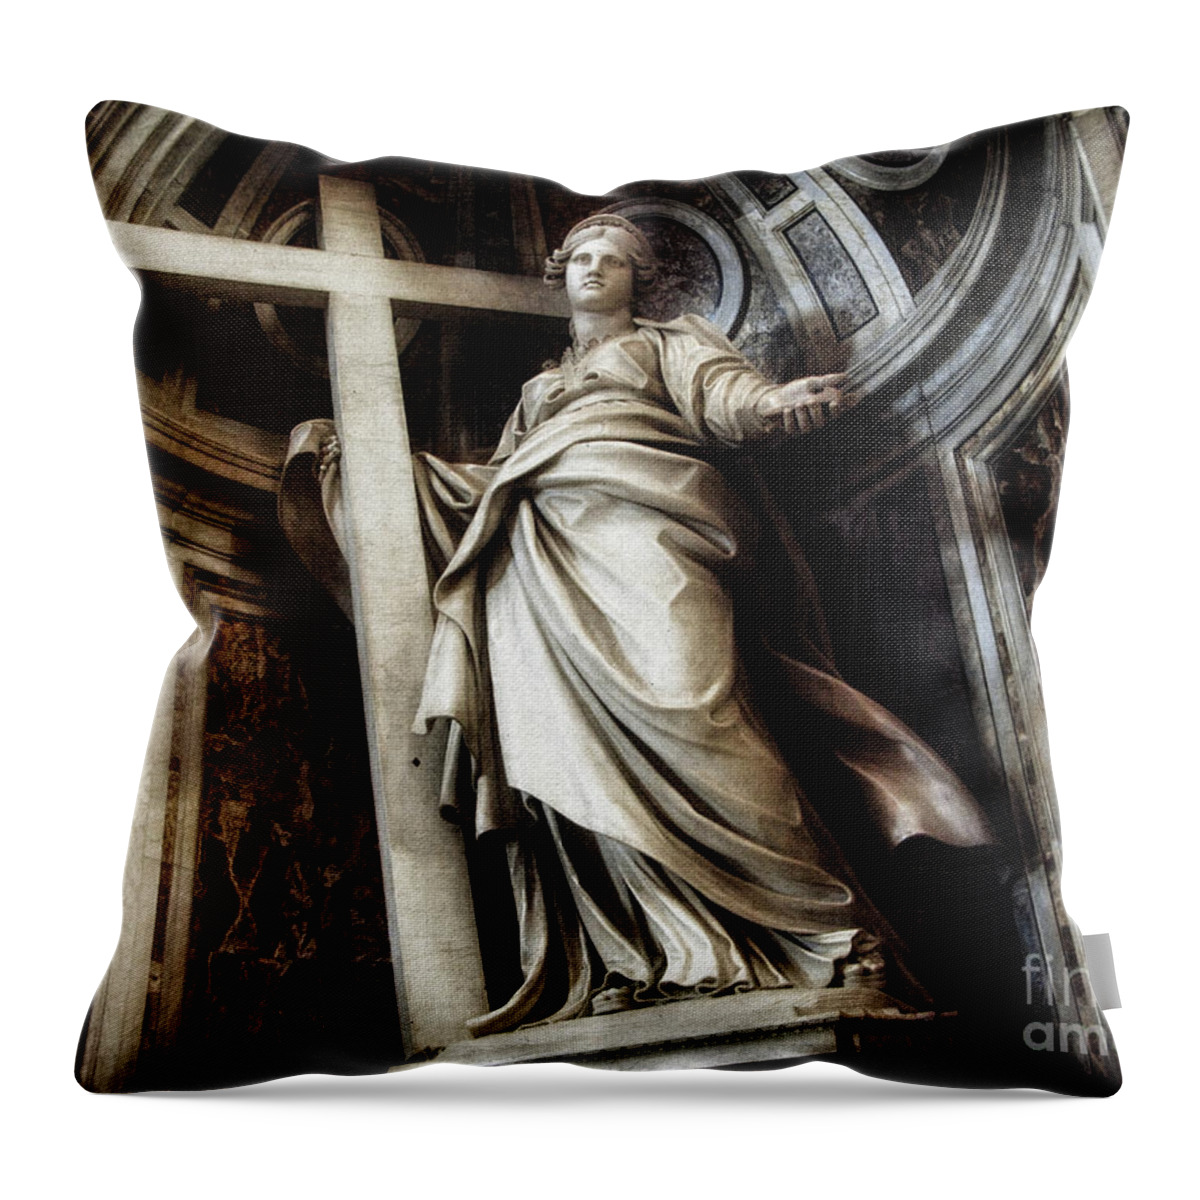 Woman Throw Pillow featuring the photograph Saint Helena statue inside Saint Peter s Basilica Rome Italy by Daliana Pacuraru